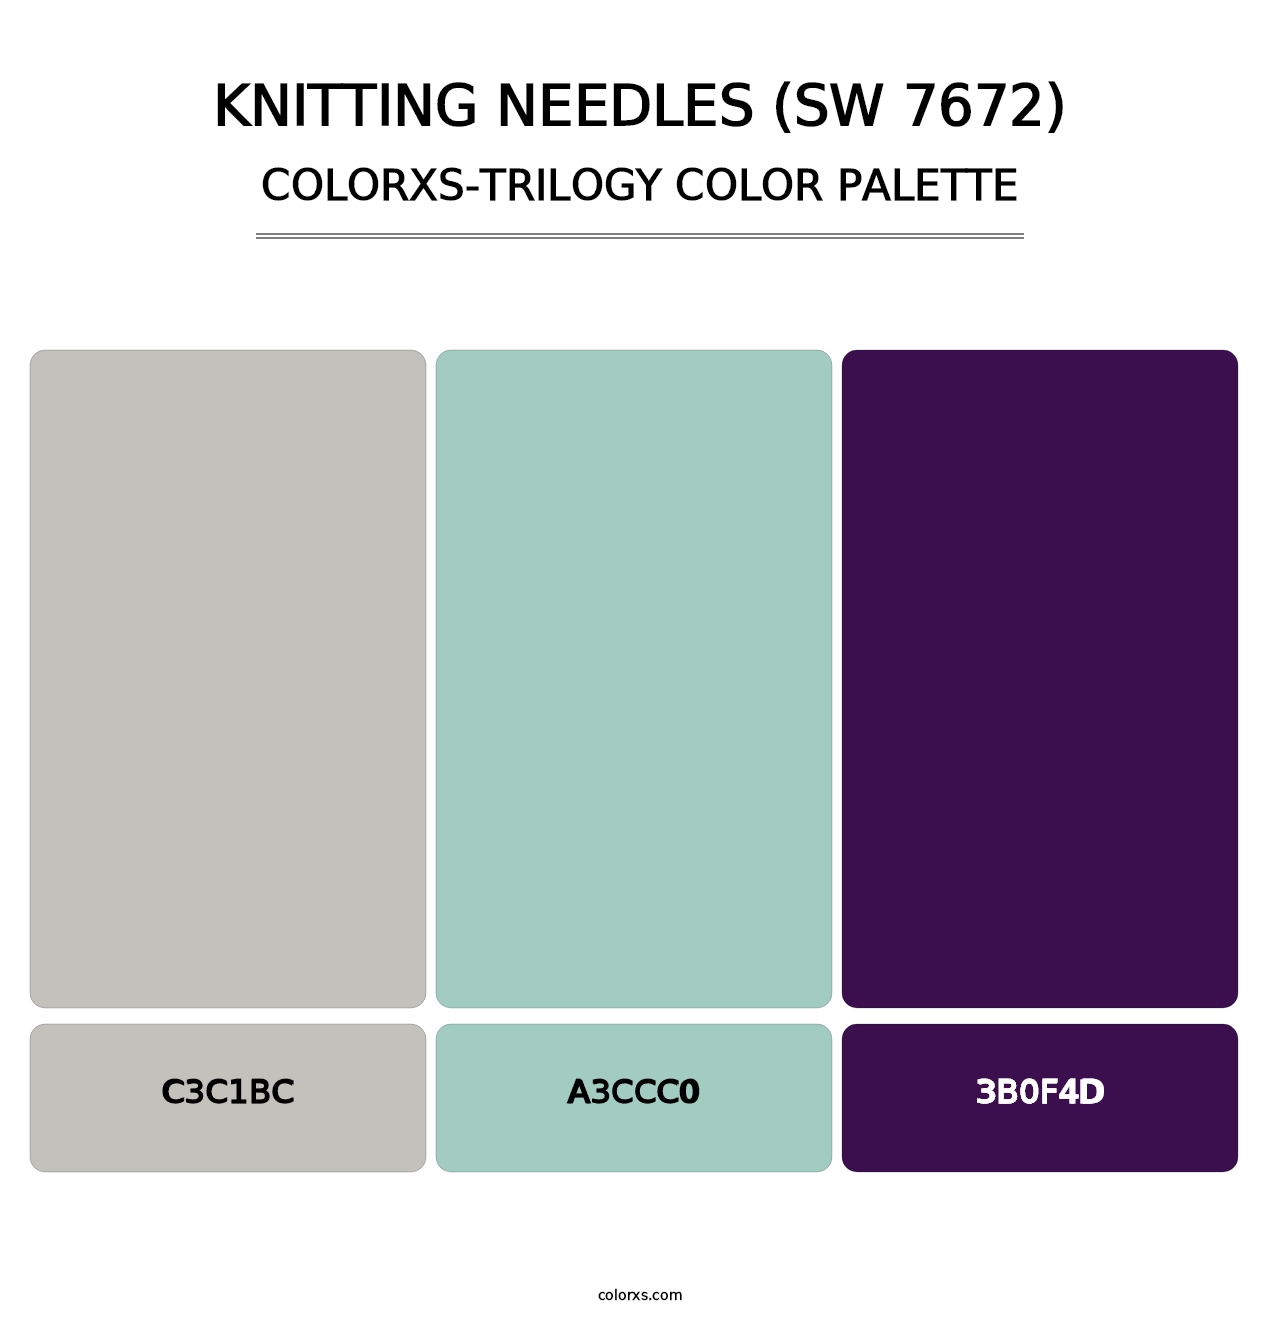 Knitting Needles (SW 7672) - Colorxs Trilogy Palette